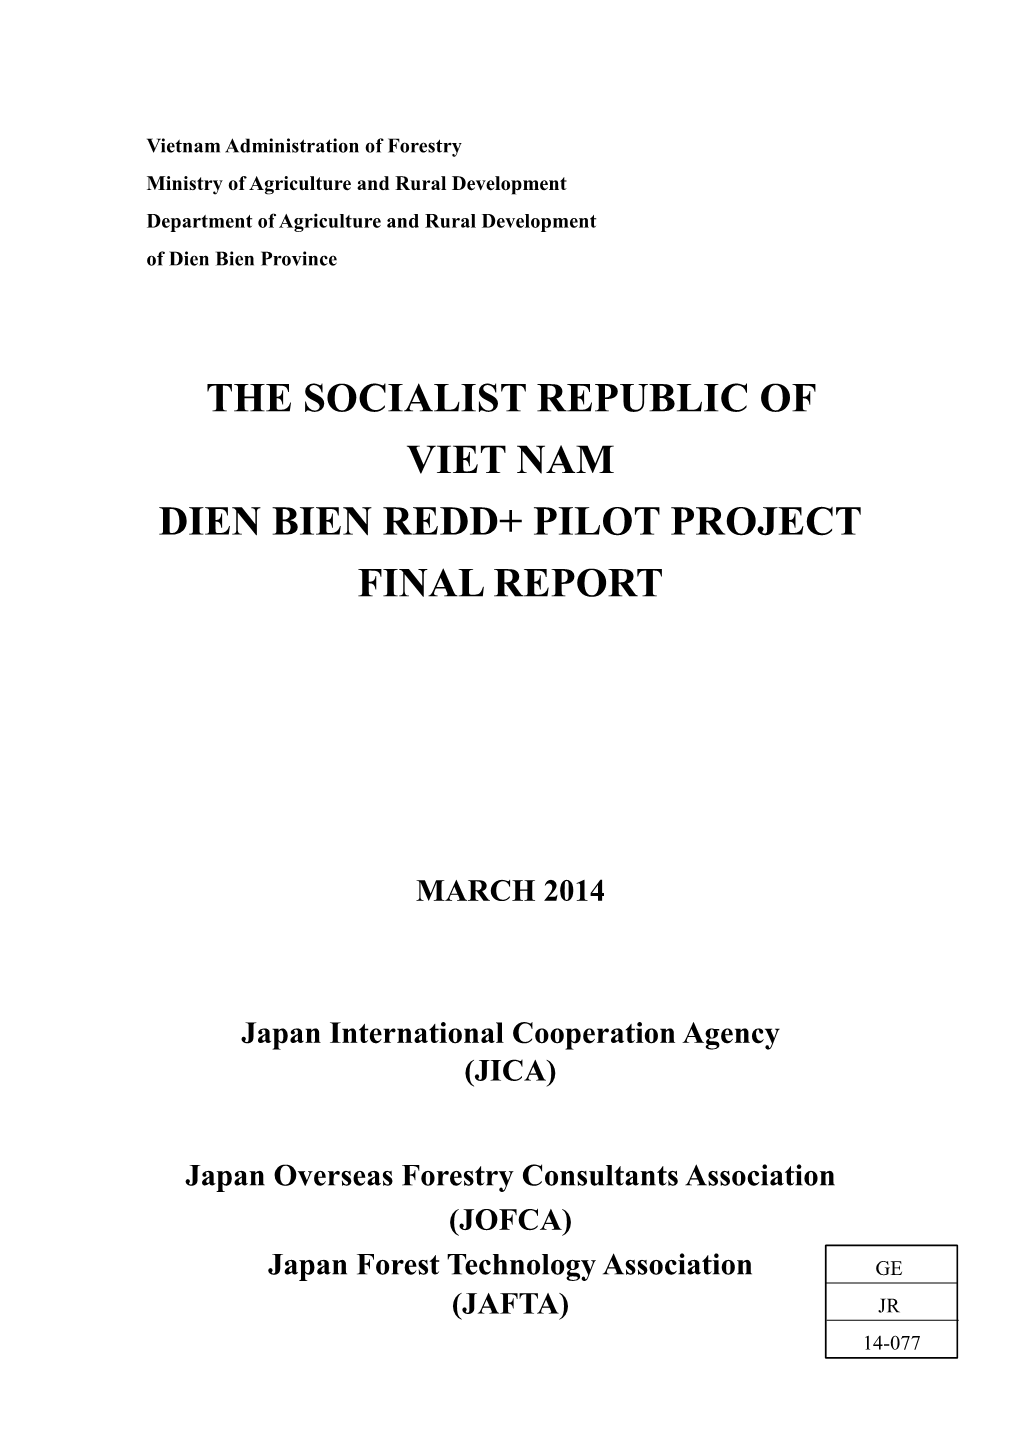 The Socialist Republic of Viet Nam Dien Bien Redd+ Pilot Project Final Report